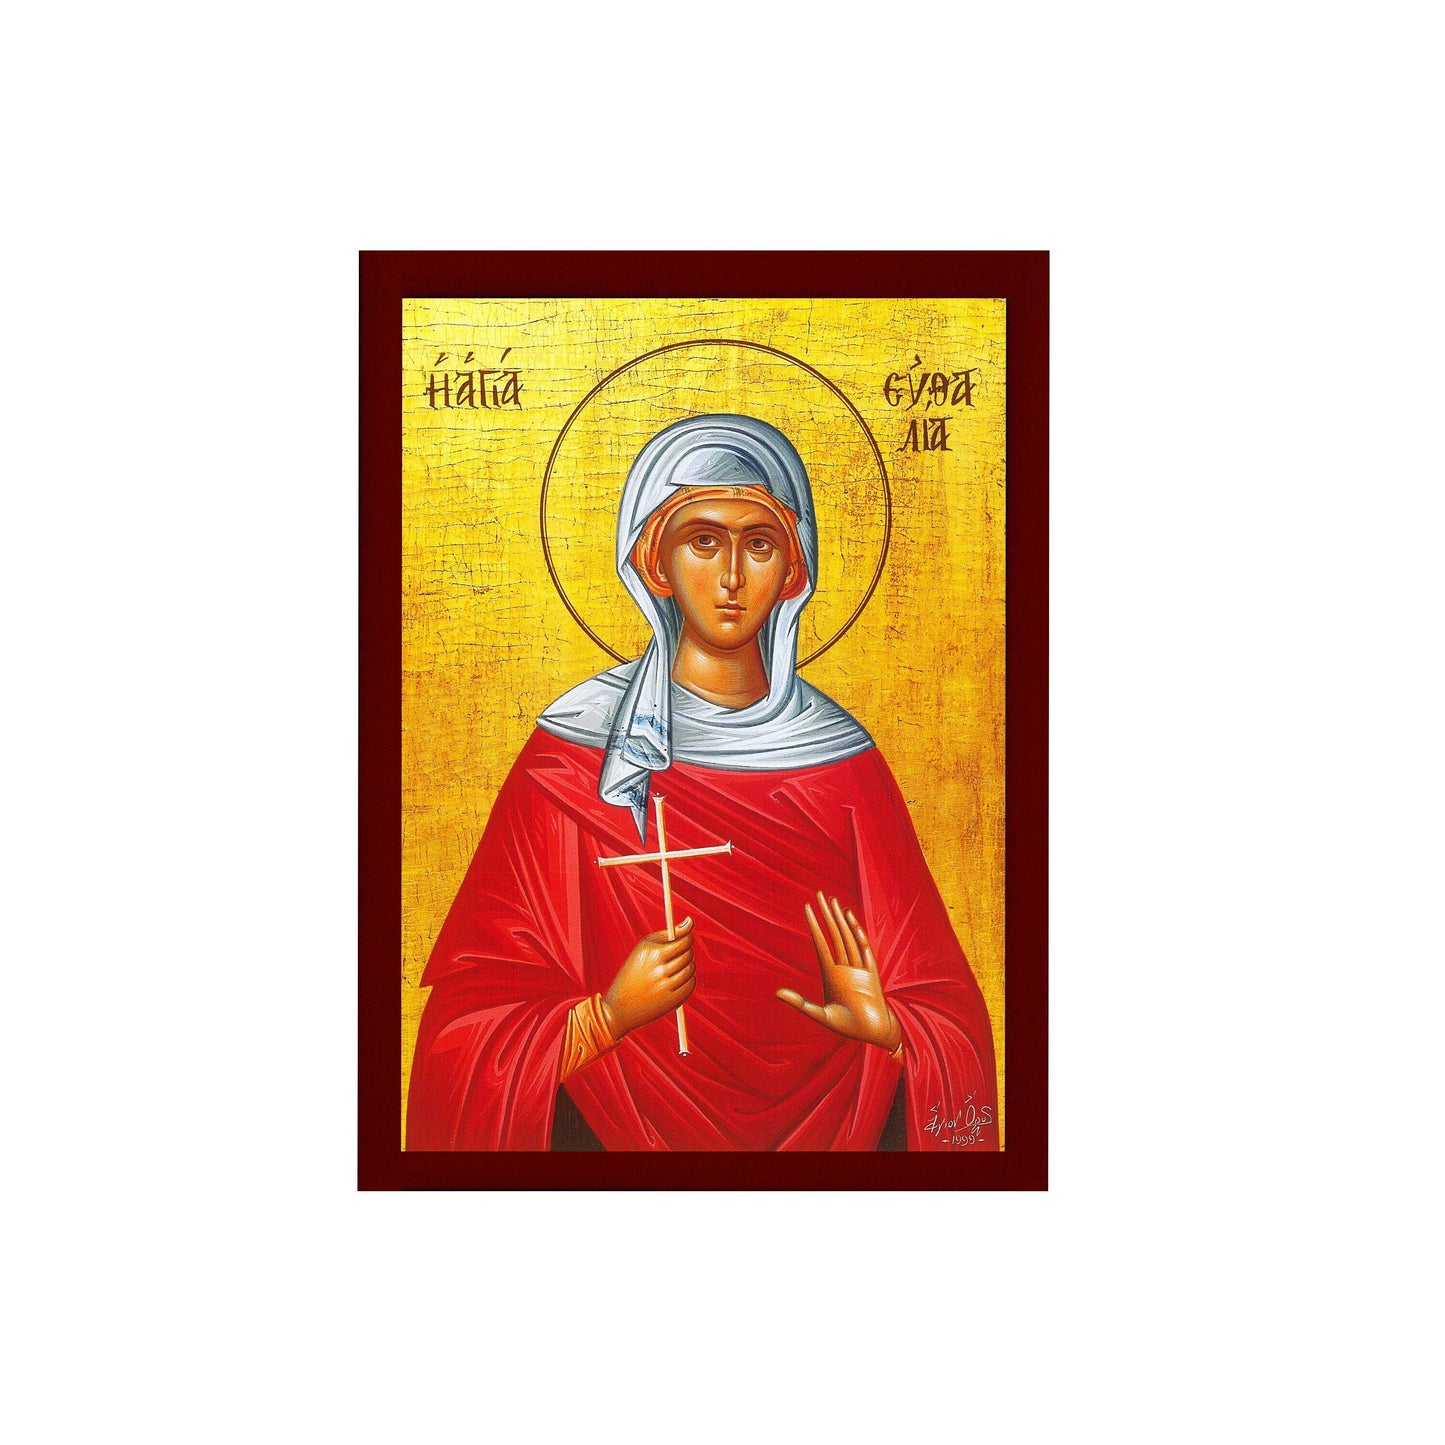 Saint Euthalia icon, Handmade Greek Orthodox icon of St Euthalia, Byzantine art wall hanging icon on wood plaque, religious decor TheHolyArt